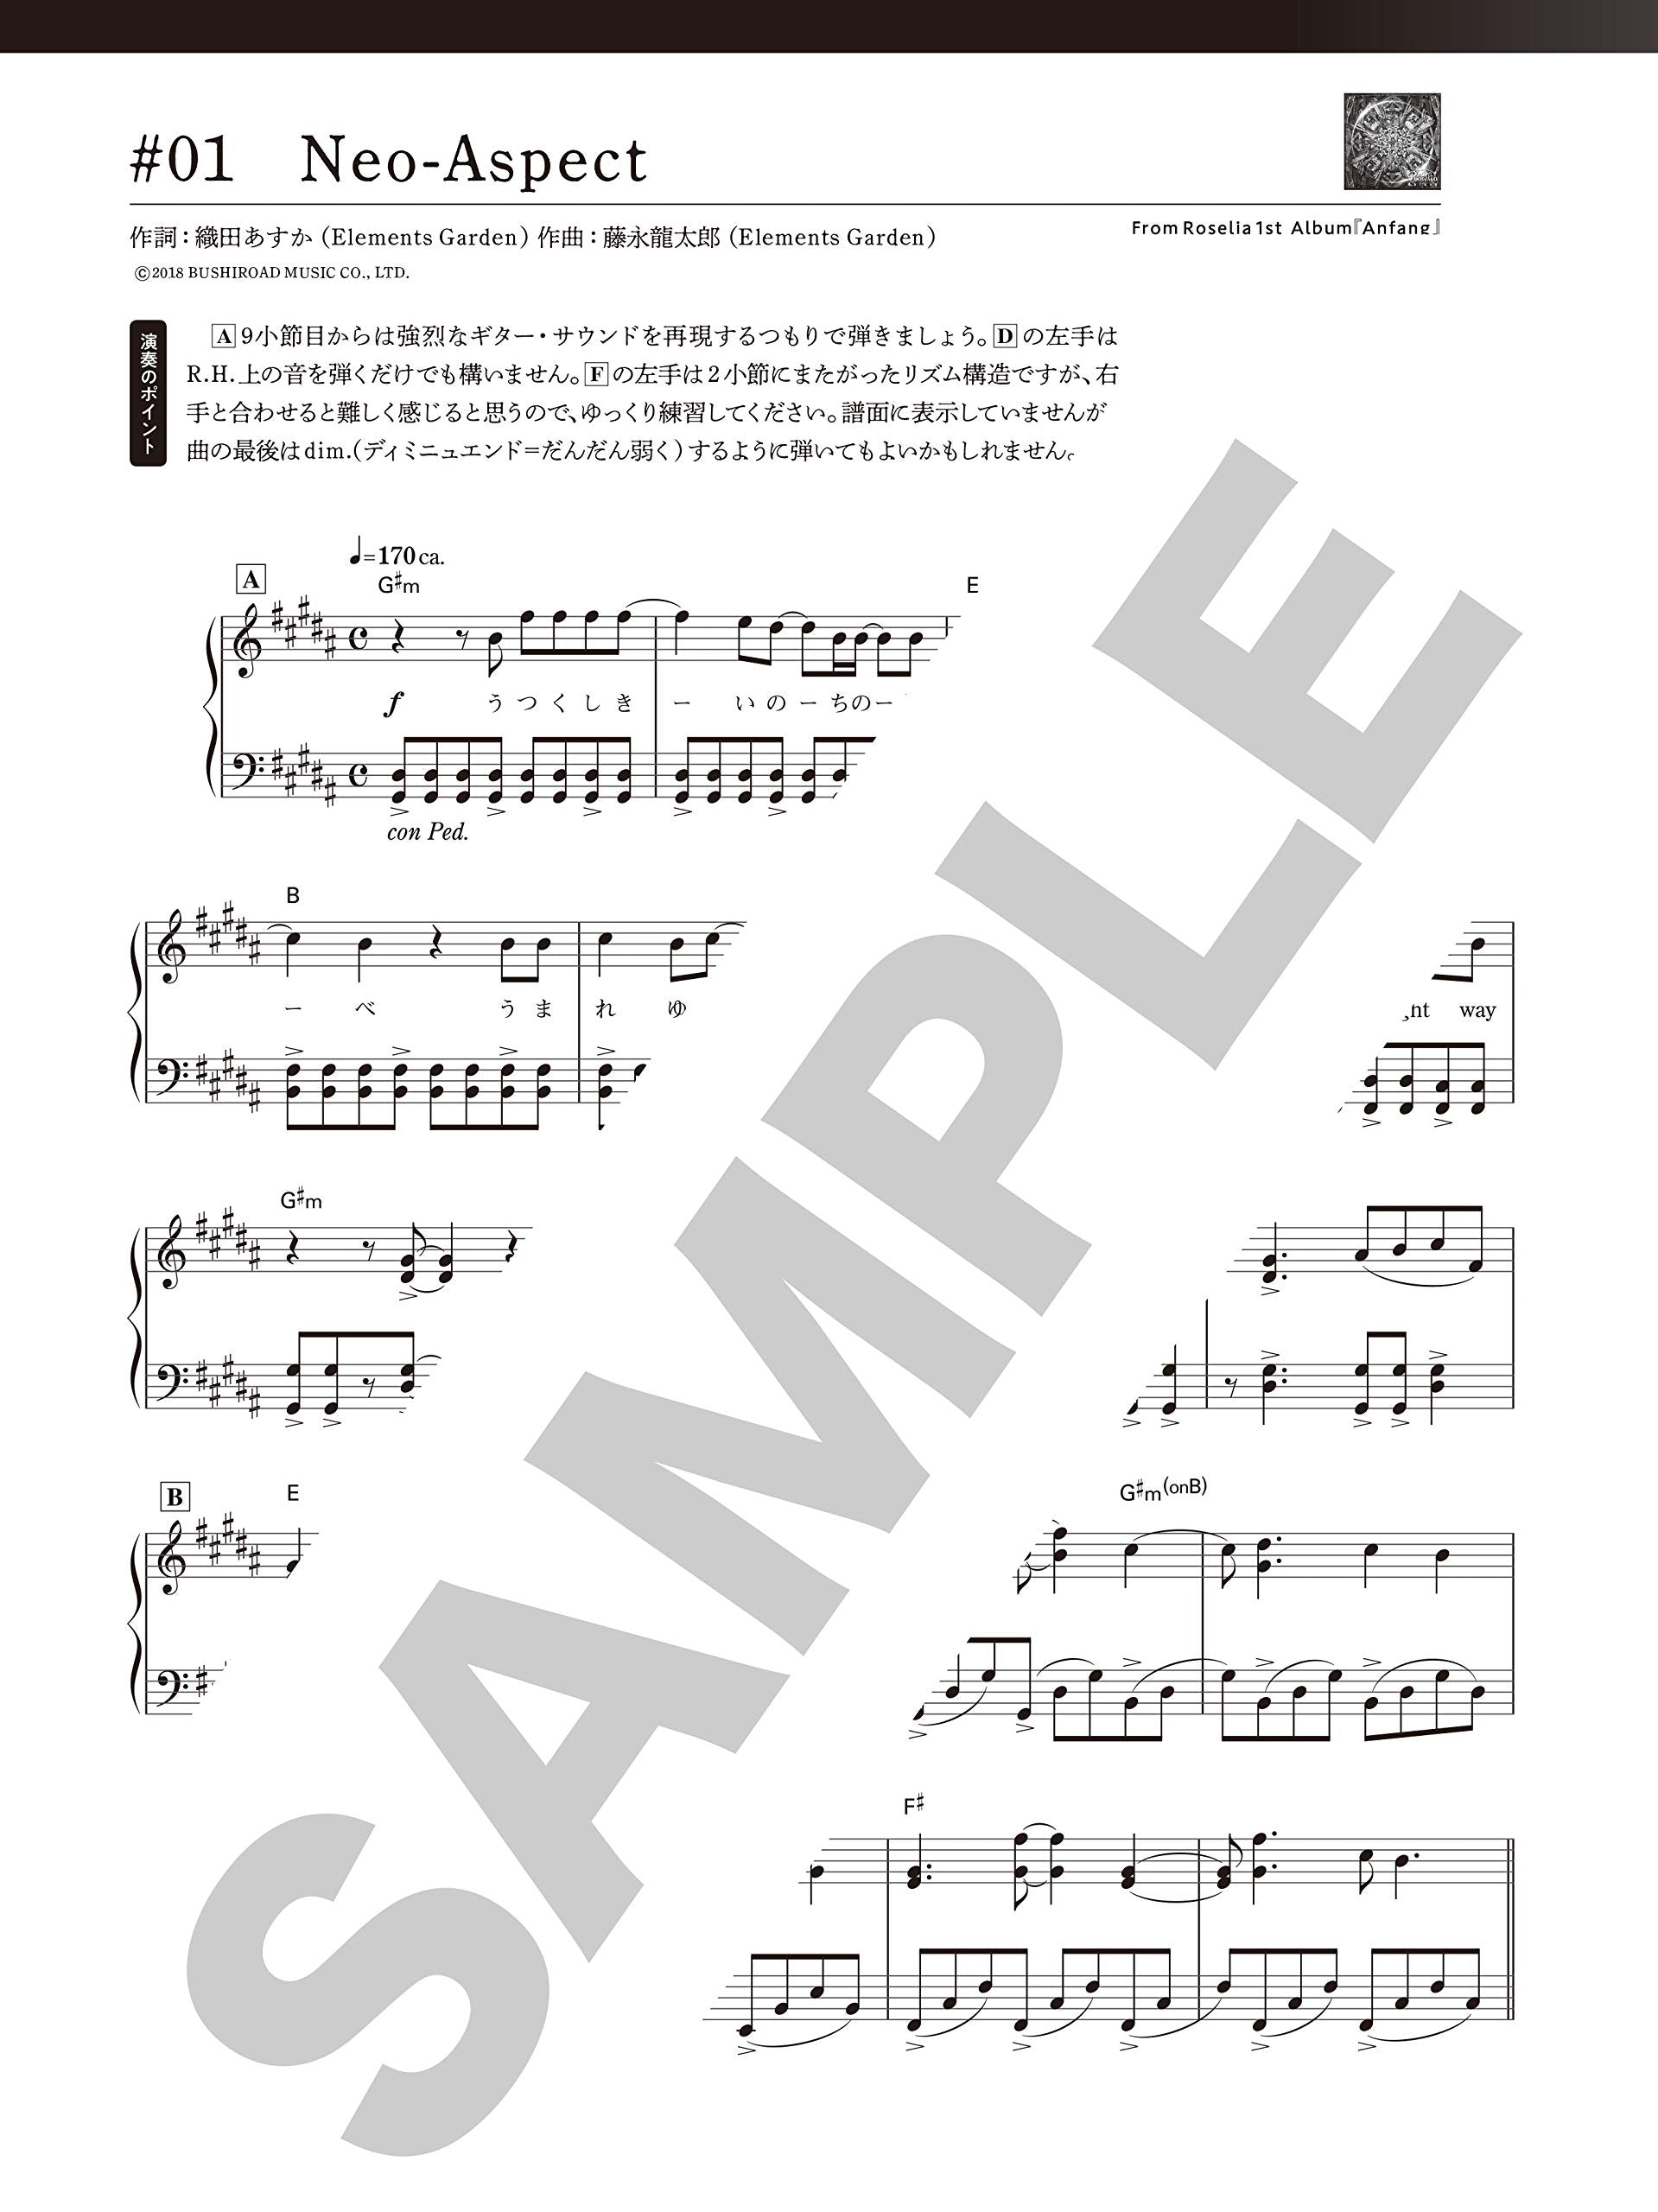 BanG Dreams! Official Piano Score Roselia for Piano Solo